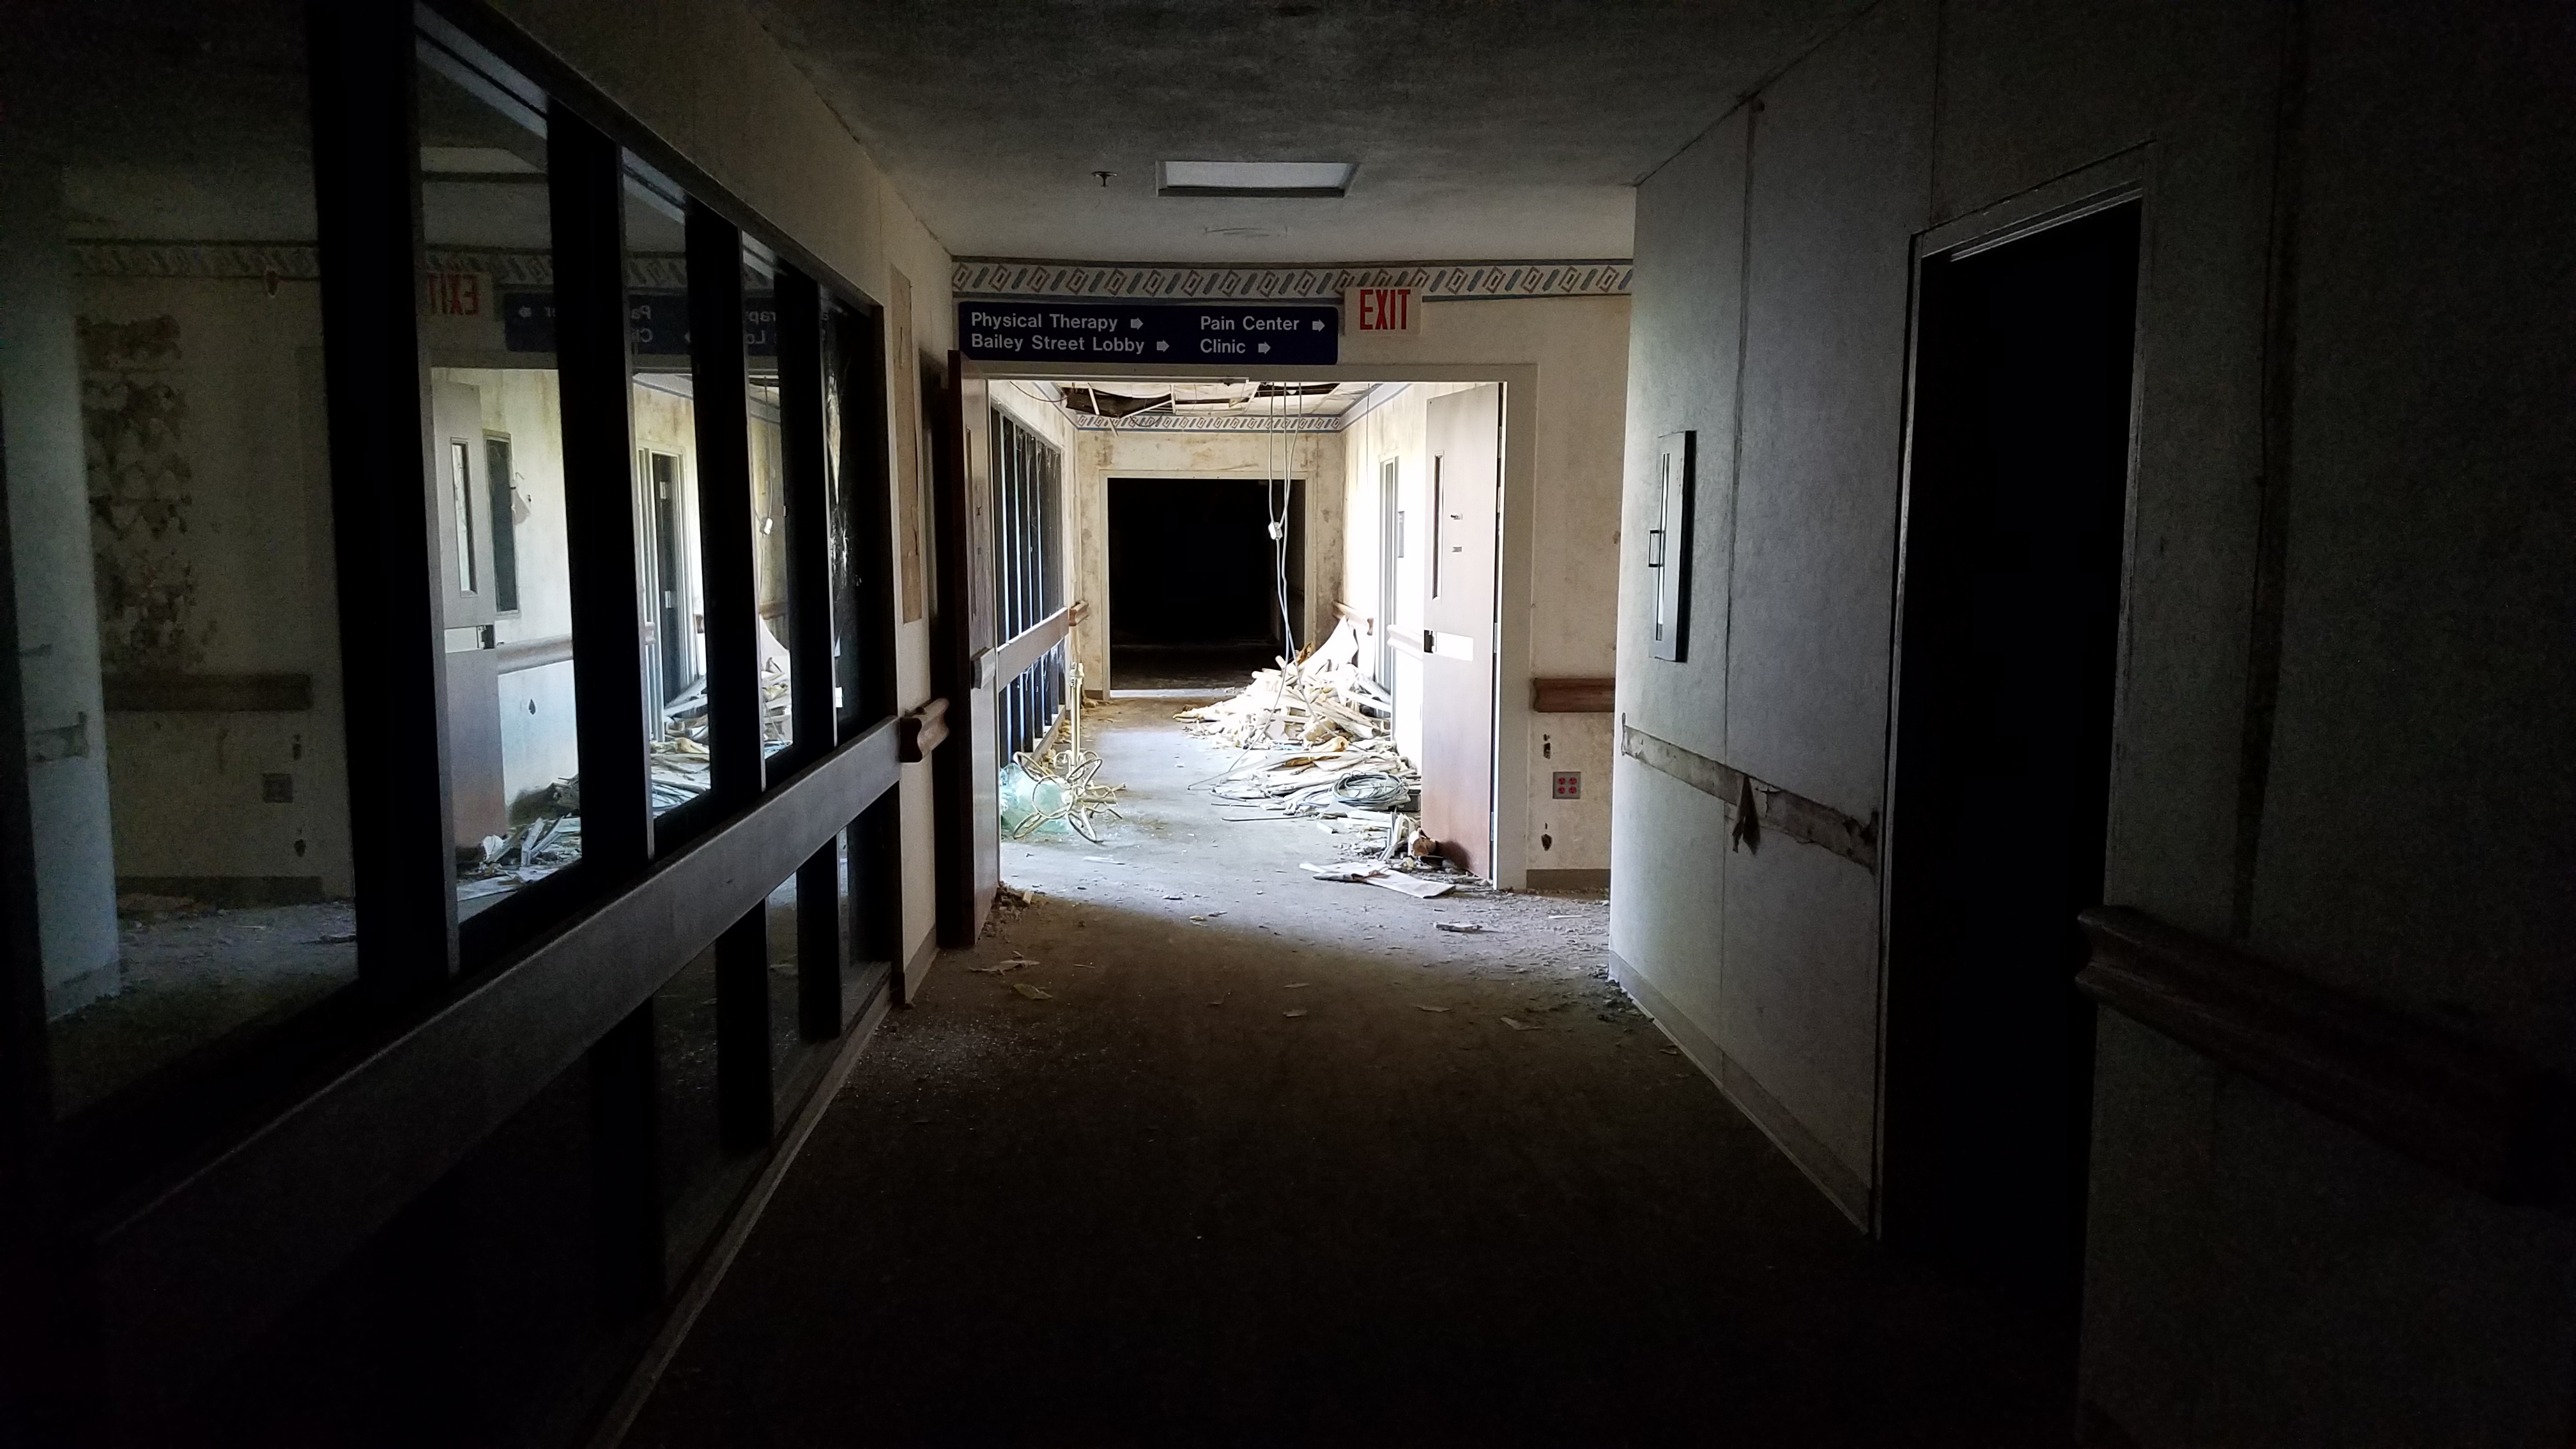 12news.com | PHOTOS: Inside the abandoned Doctors Hospital4032 x 2268